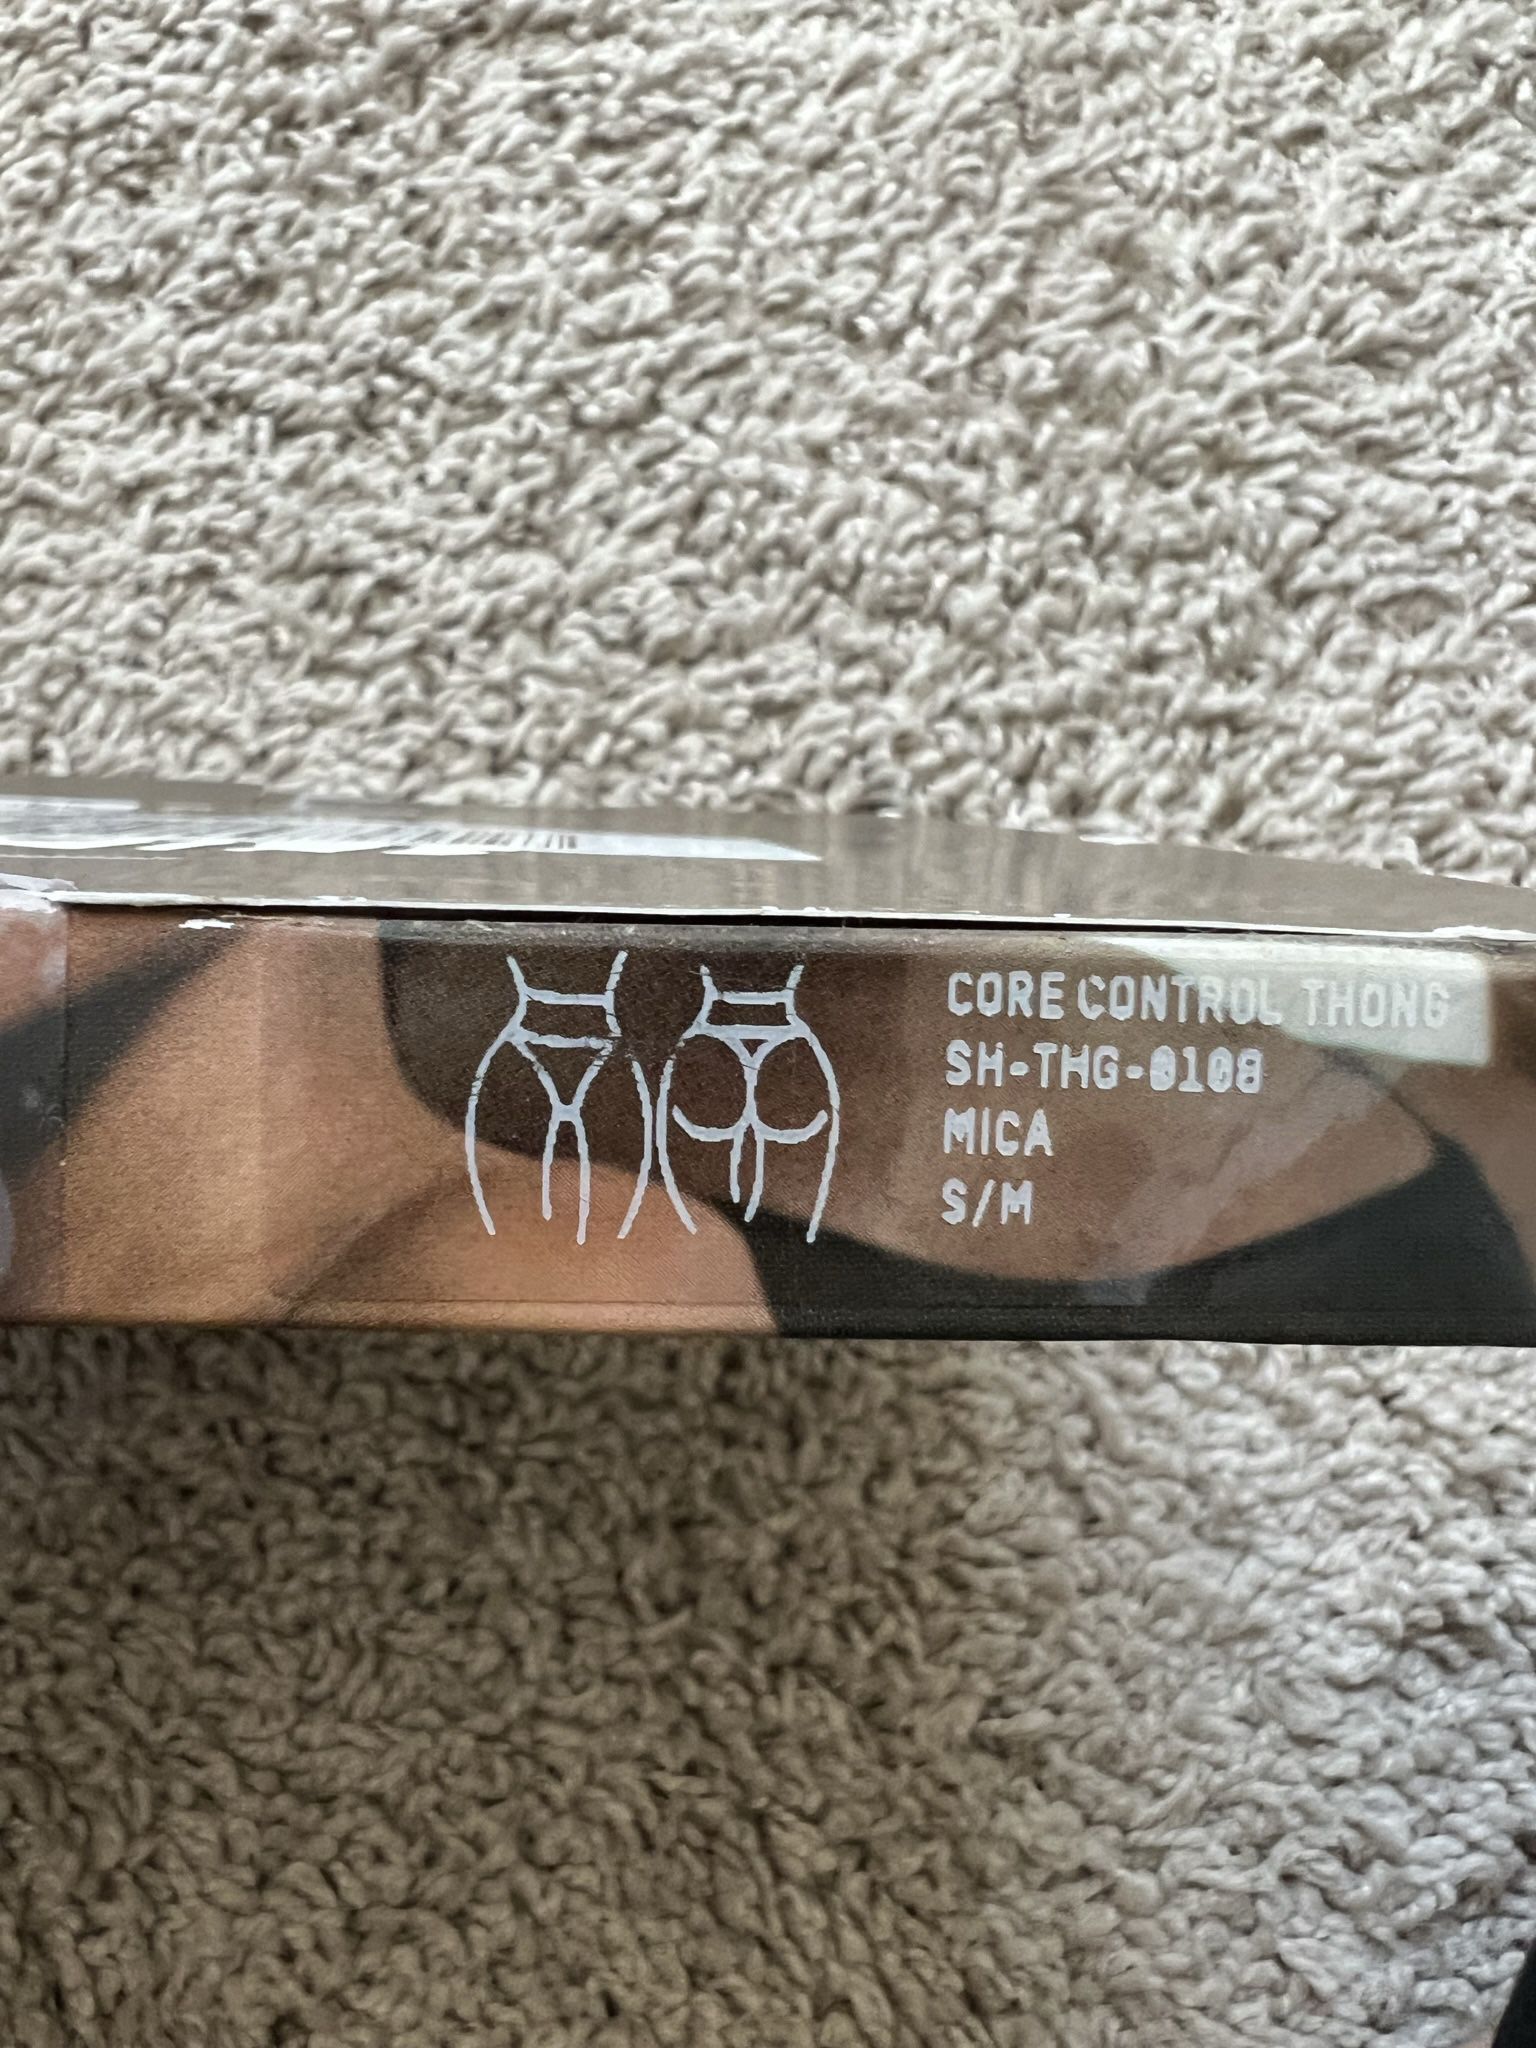 Core Control thong - Mica